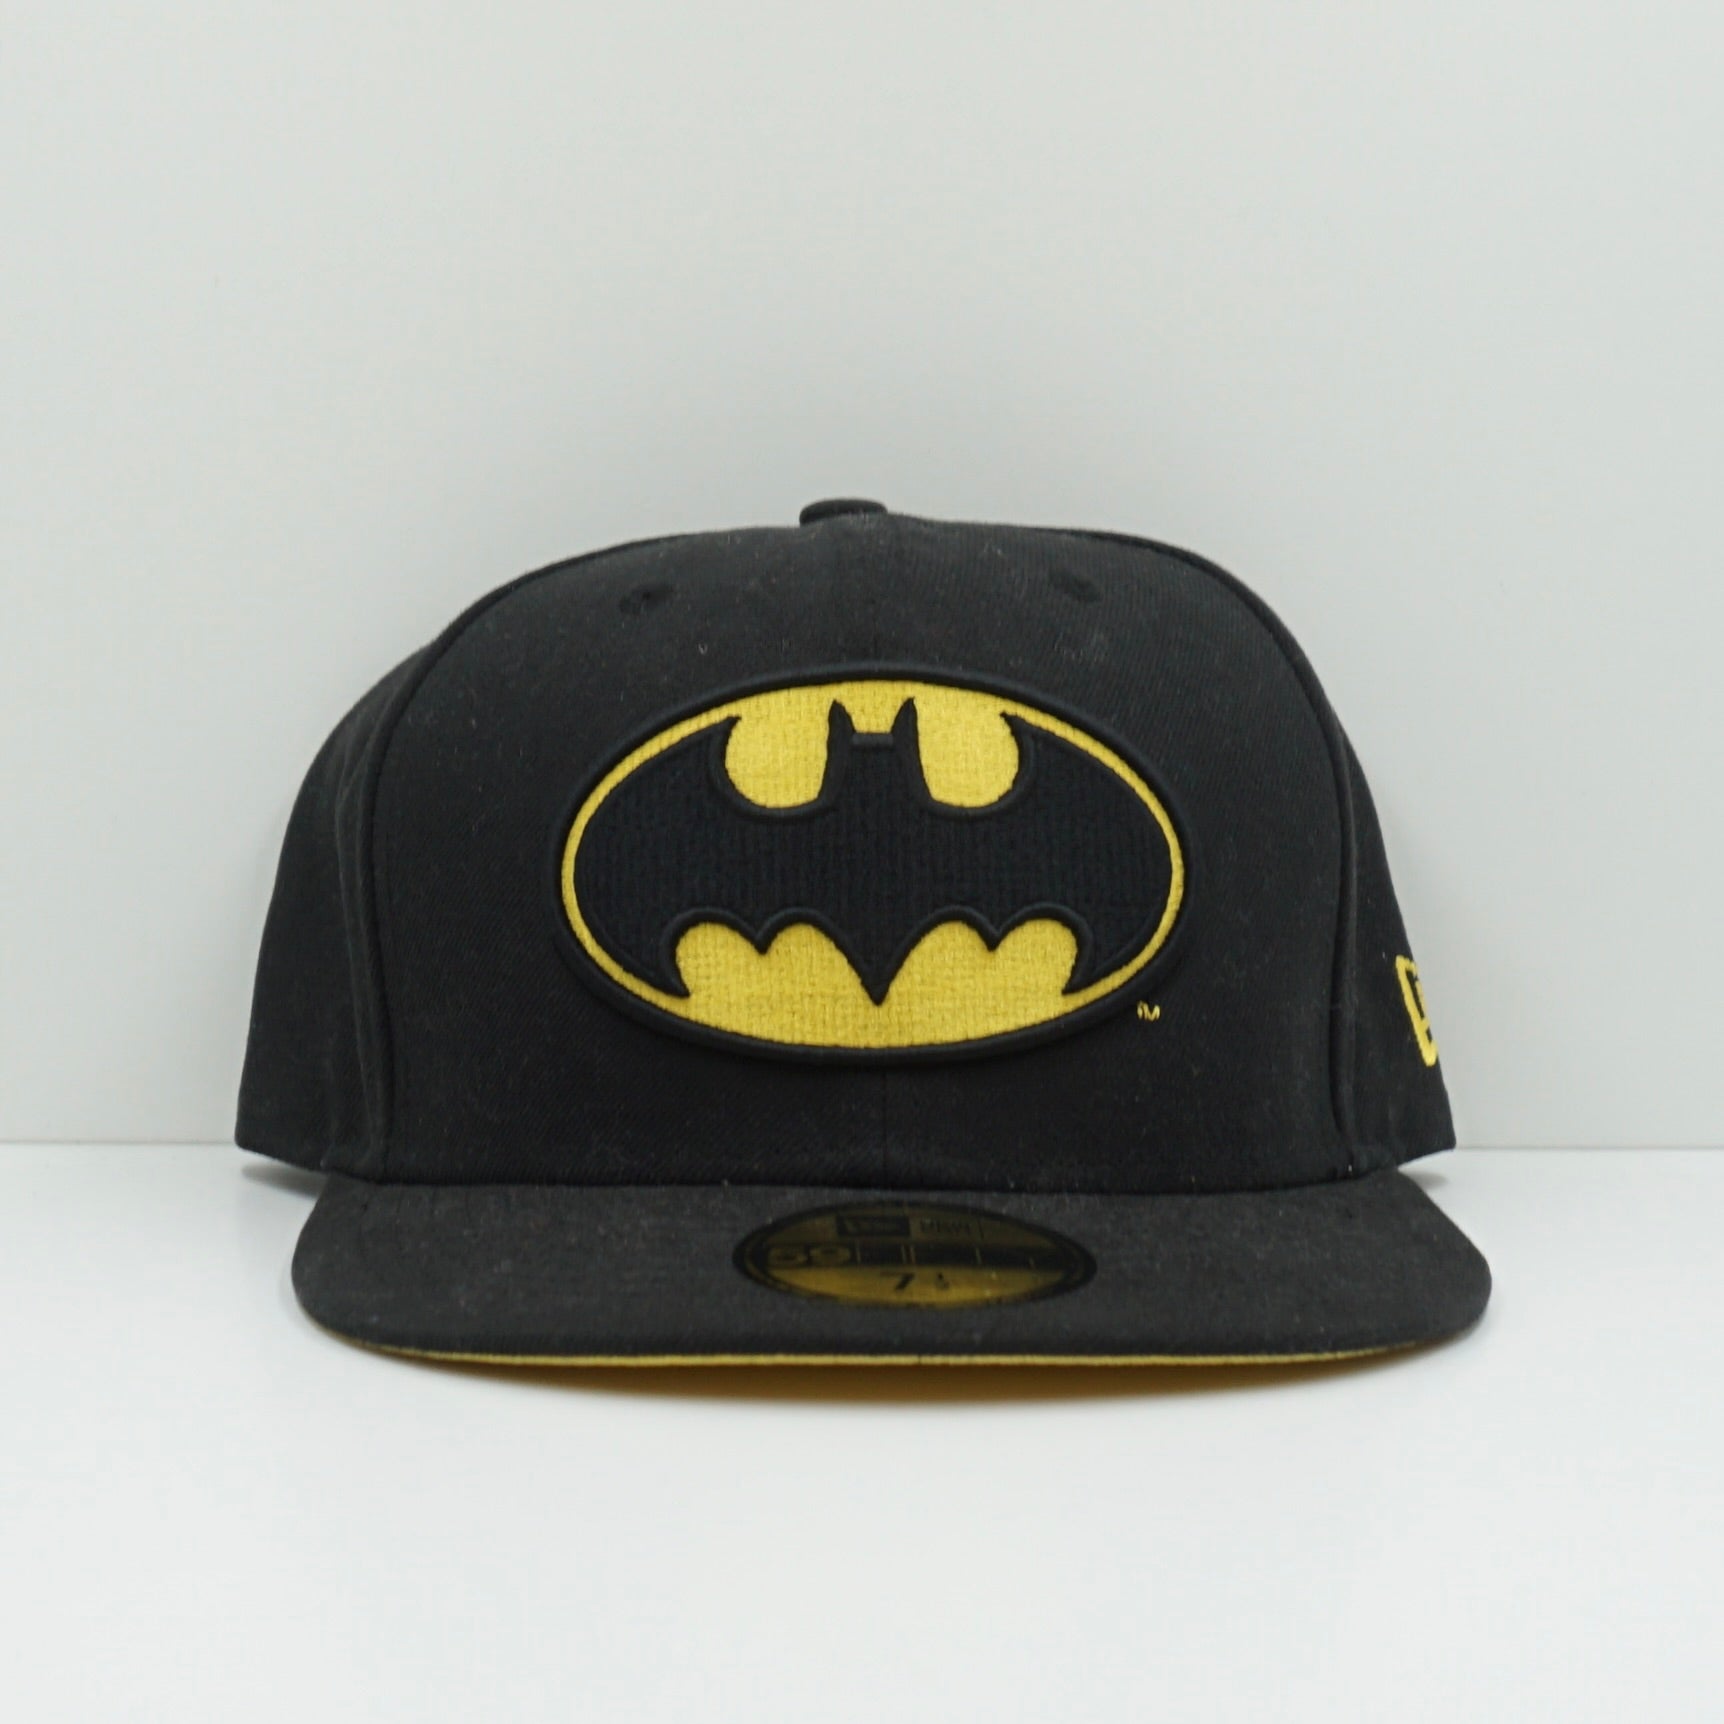 New Era Batman Black/Yellow Fitted Cap